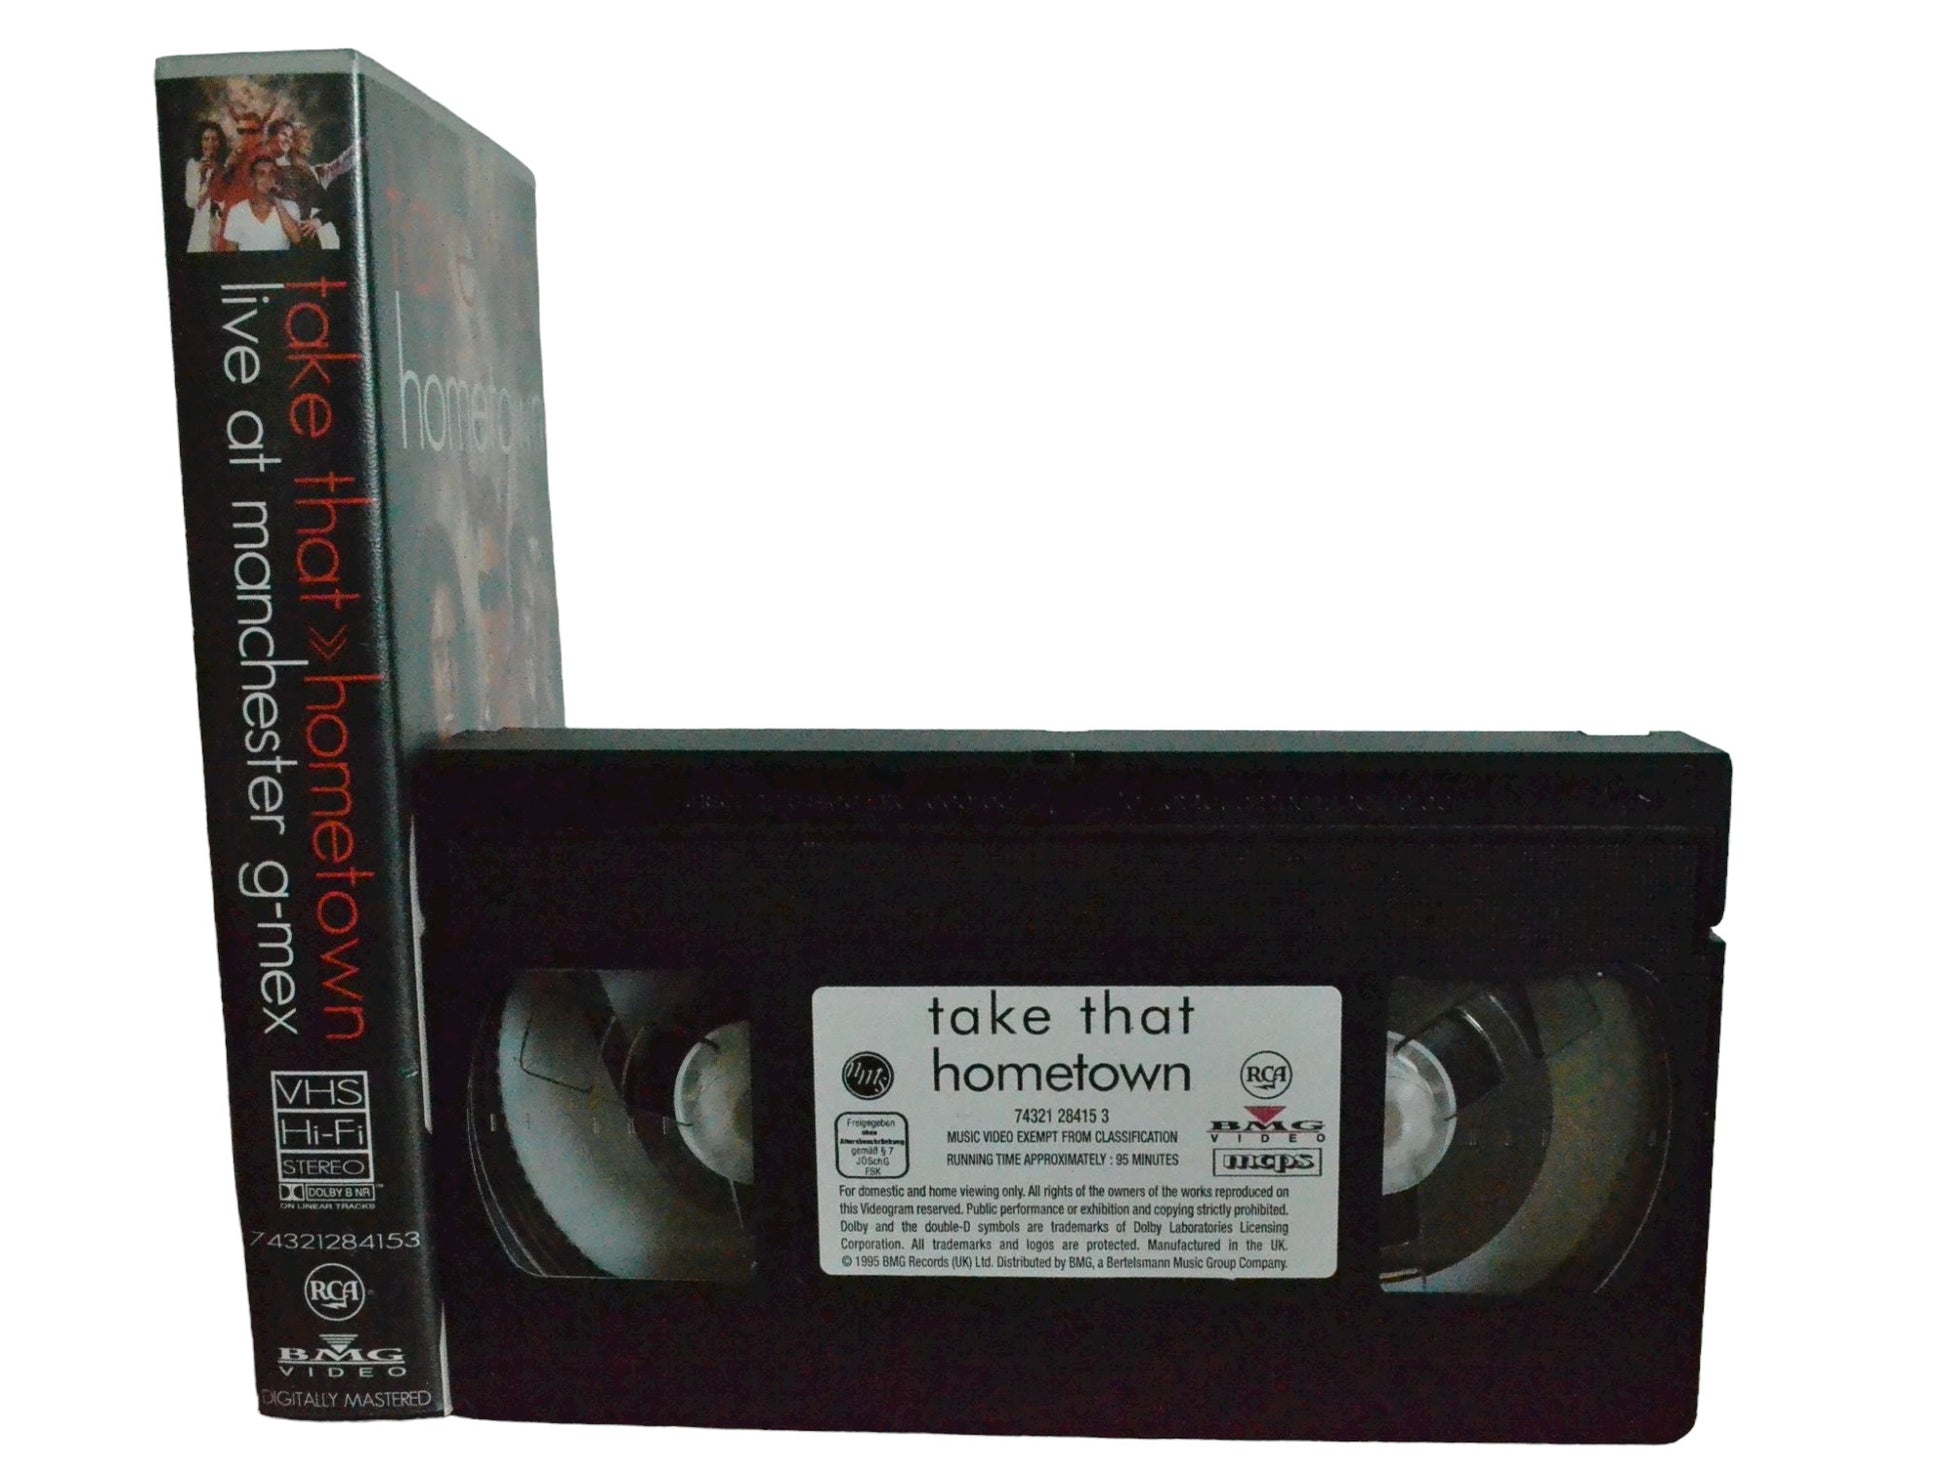 Take That - HomeTown - Gary Barlow - BMG Video - Music - PAL - VHS-